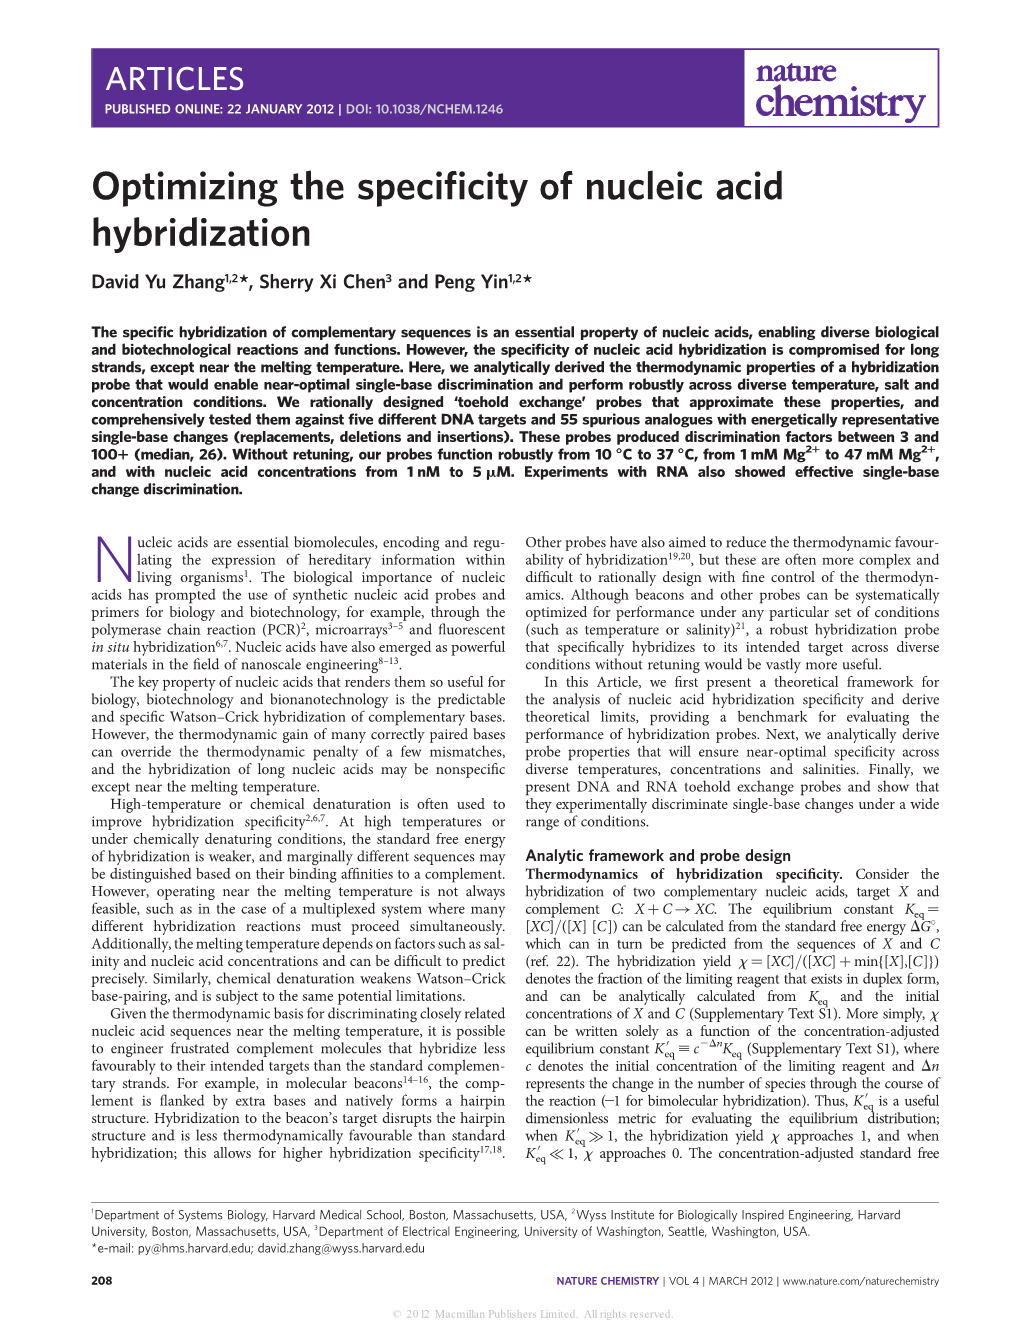 Optimizing the Specificity of Nucleic Acid Hybridization